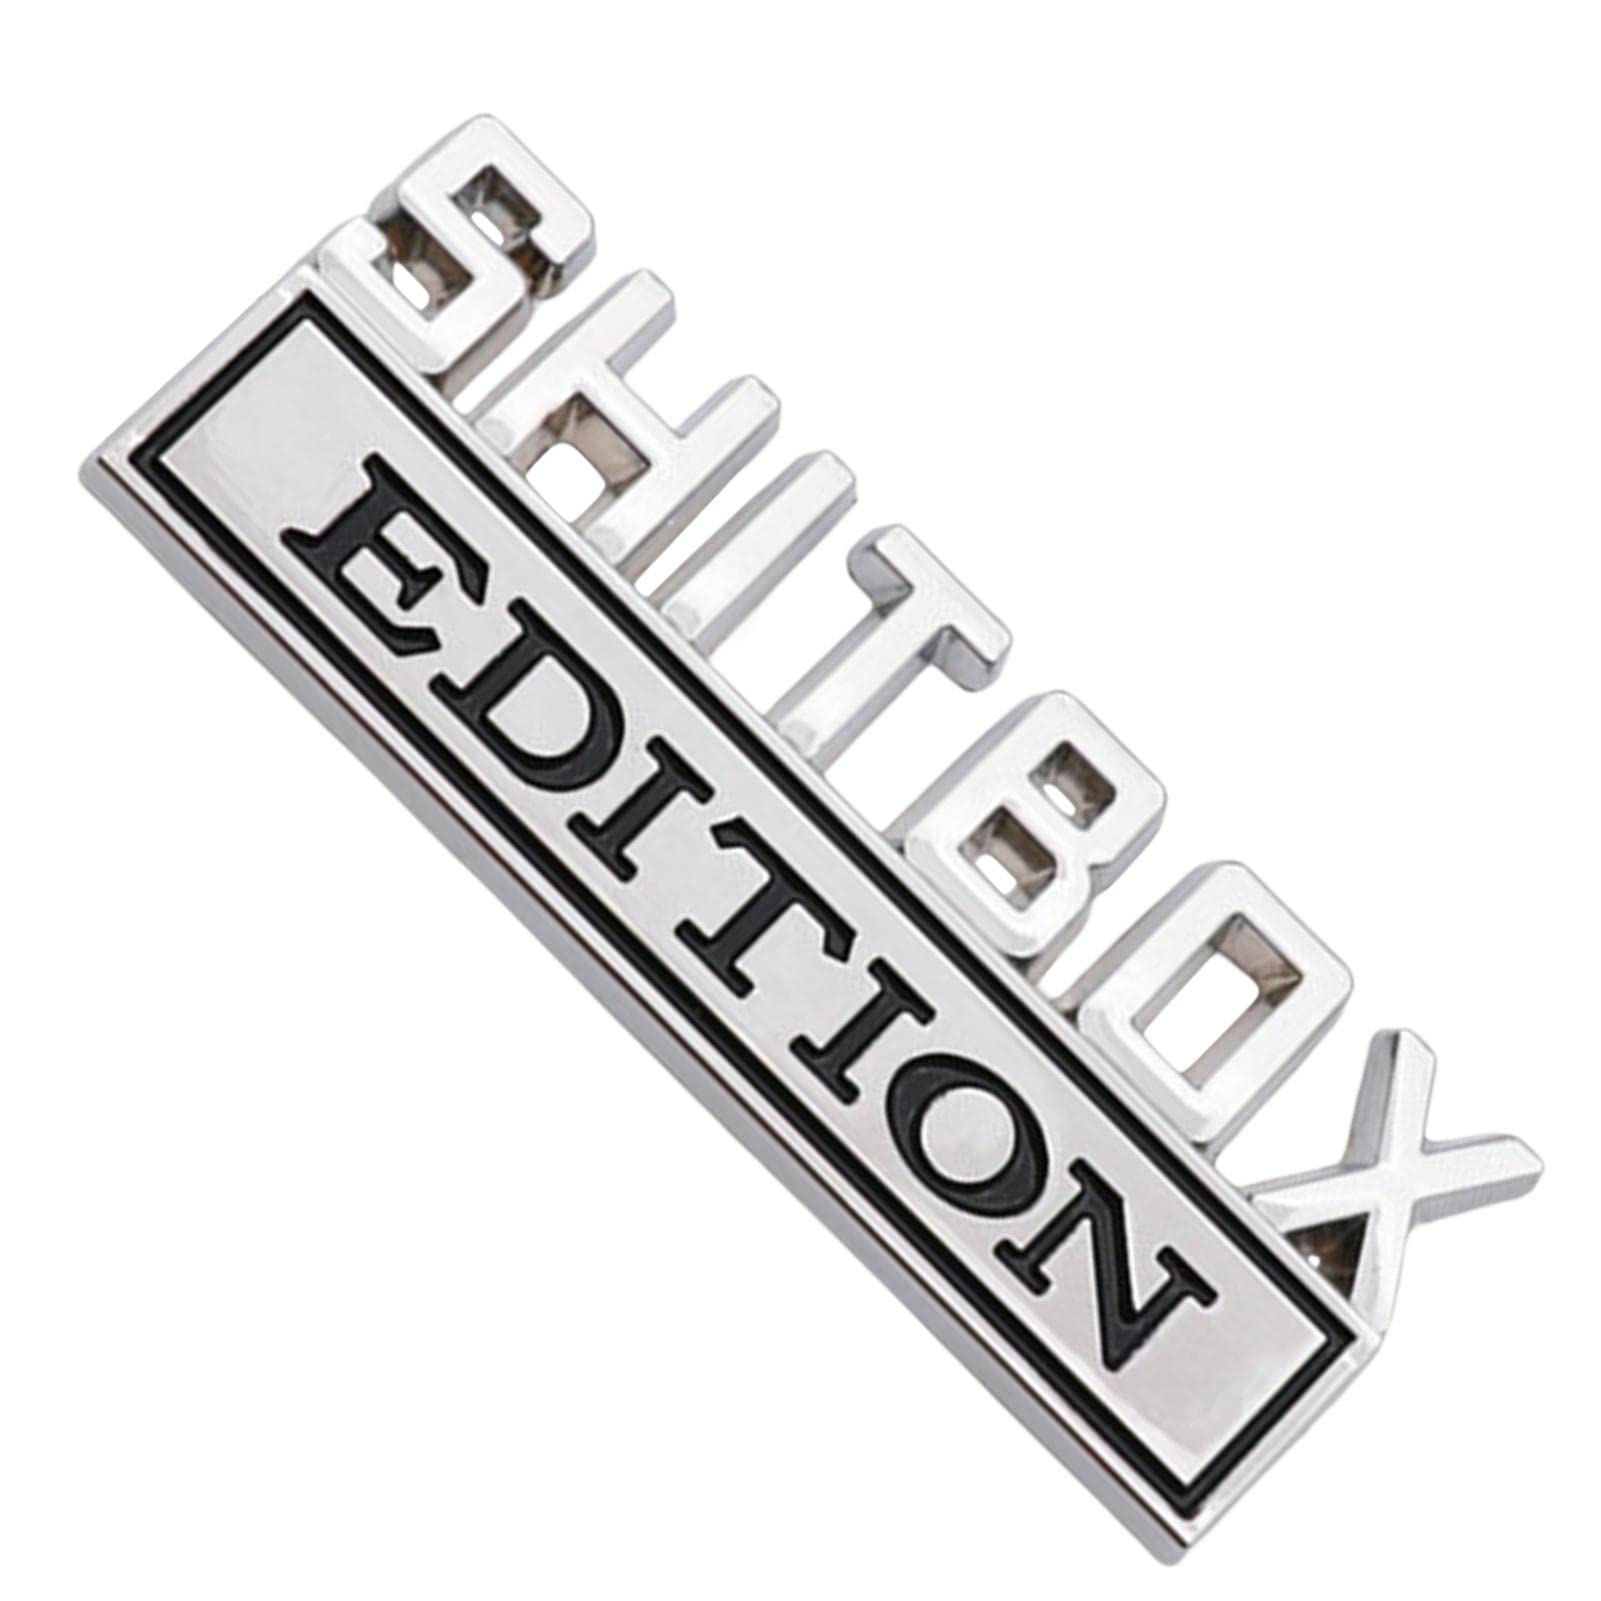 Evenlyao 1 x 3D Big Size SHITBOX Edition Emblem, ABS Auto Badge, Car Tail Trunk Side Body Stickers, Fahrzeug Sticker Decal for Cars Trucks, Starker Kleber, 17.5x3.8cm von Evenlyao